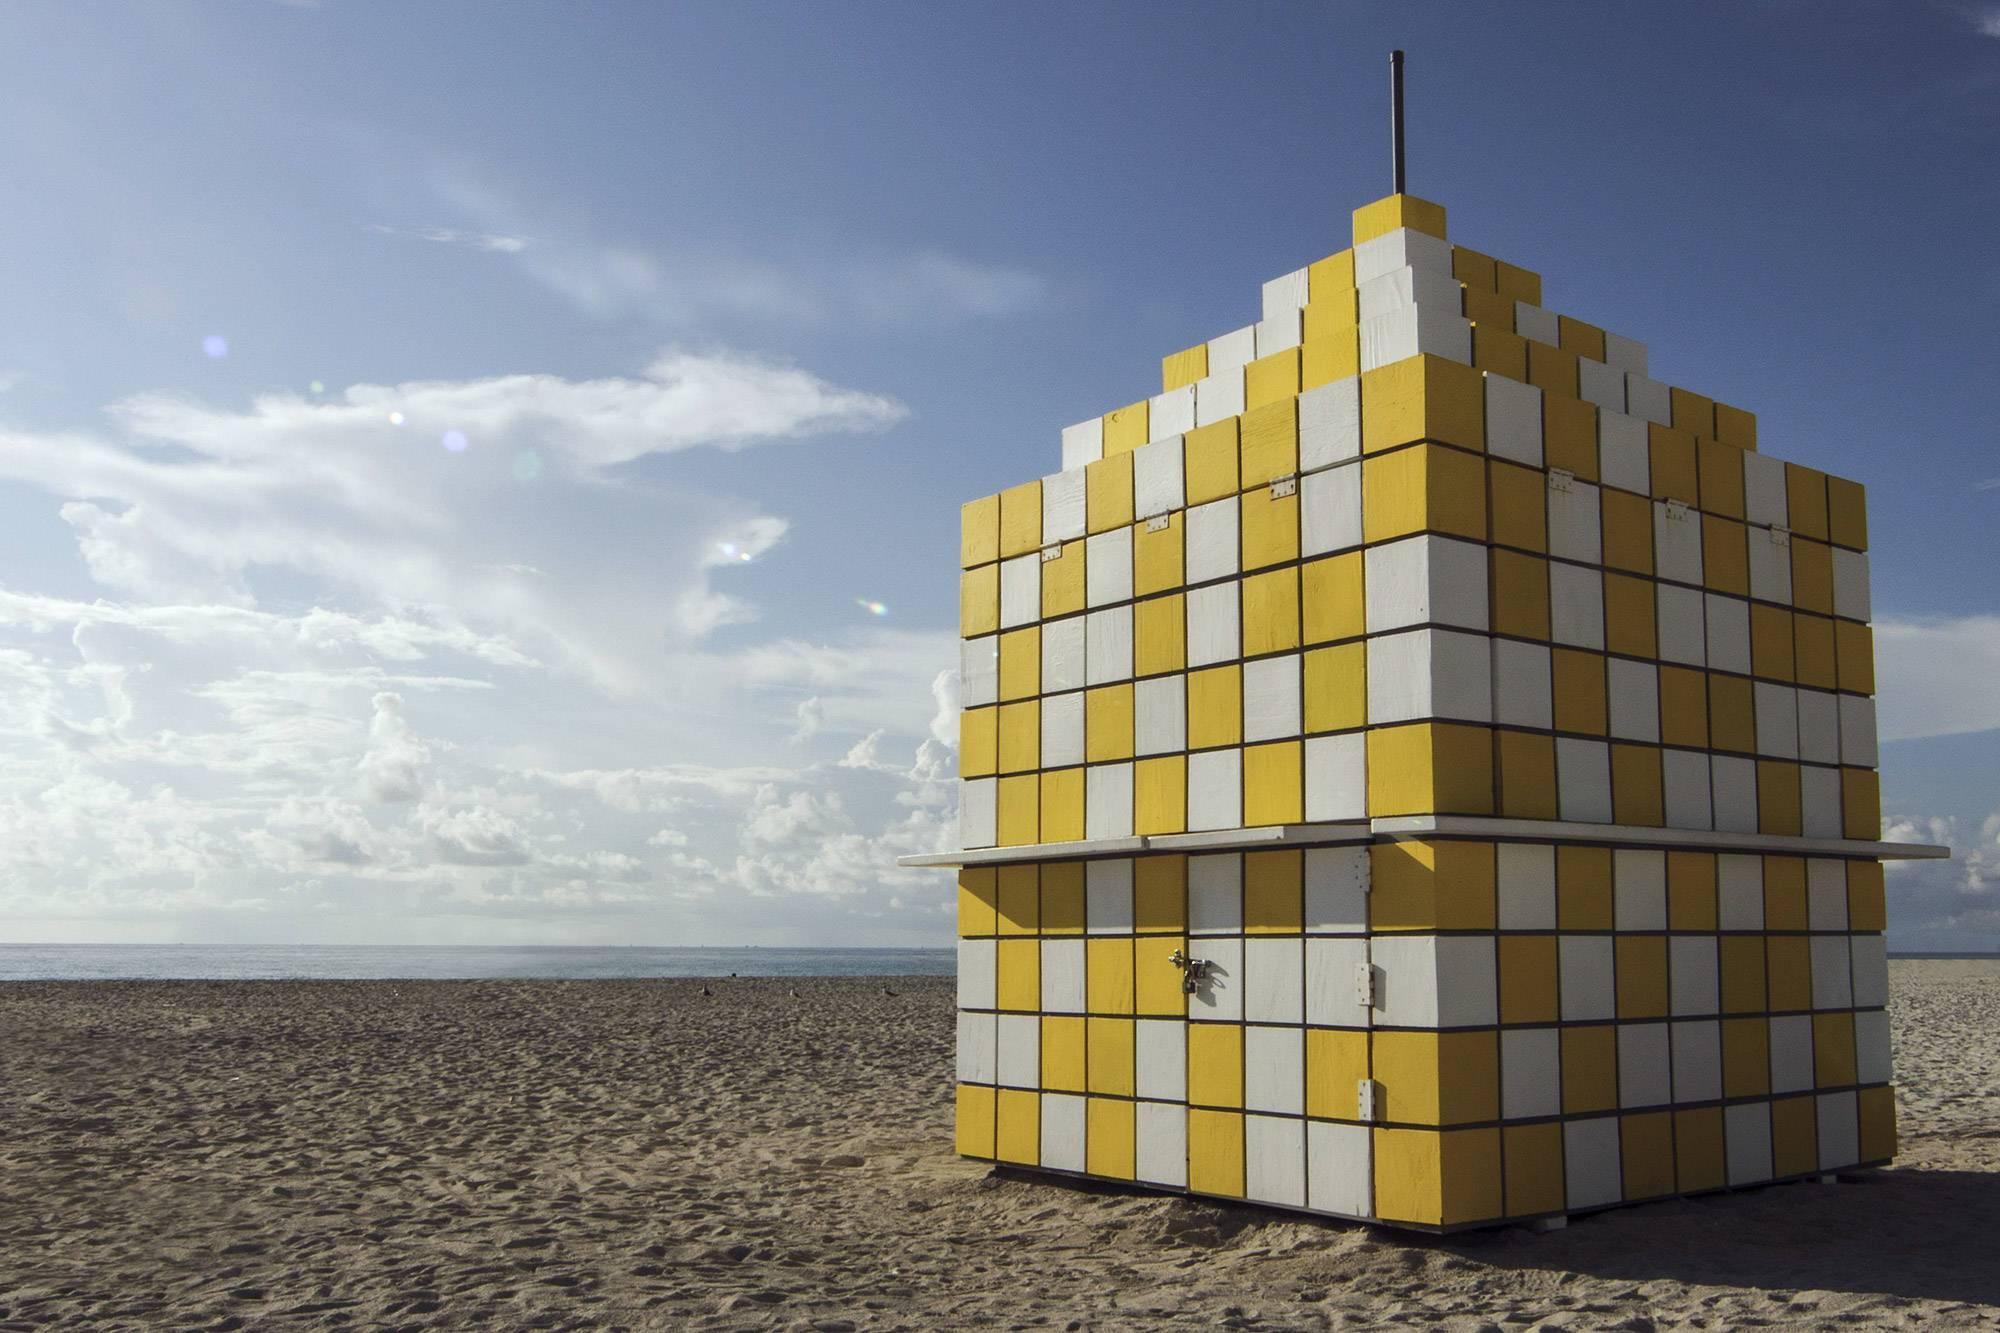 Juan Pablo Castro Color Photograph – Rubik's Cube. Architektonische Farbfotografie in limitierter Auflage